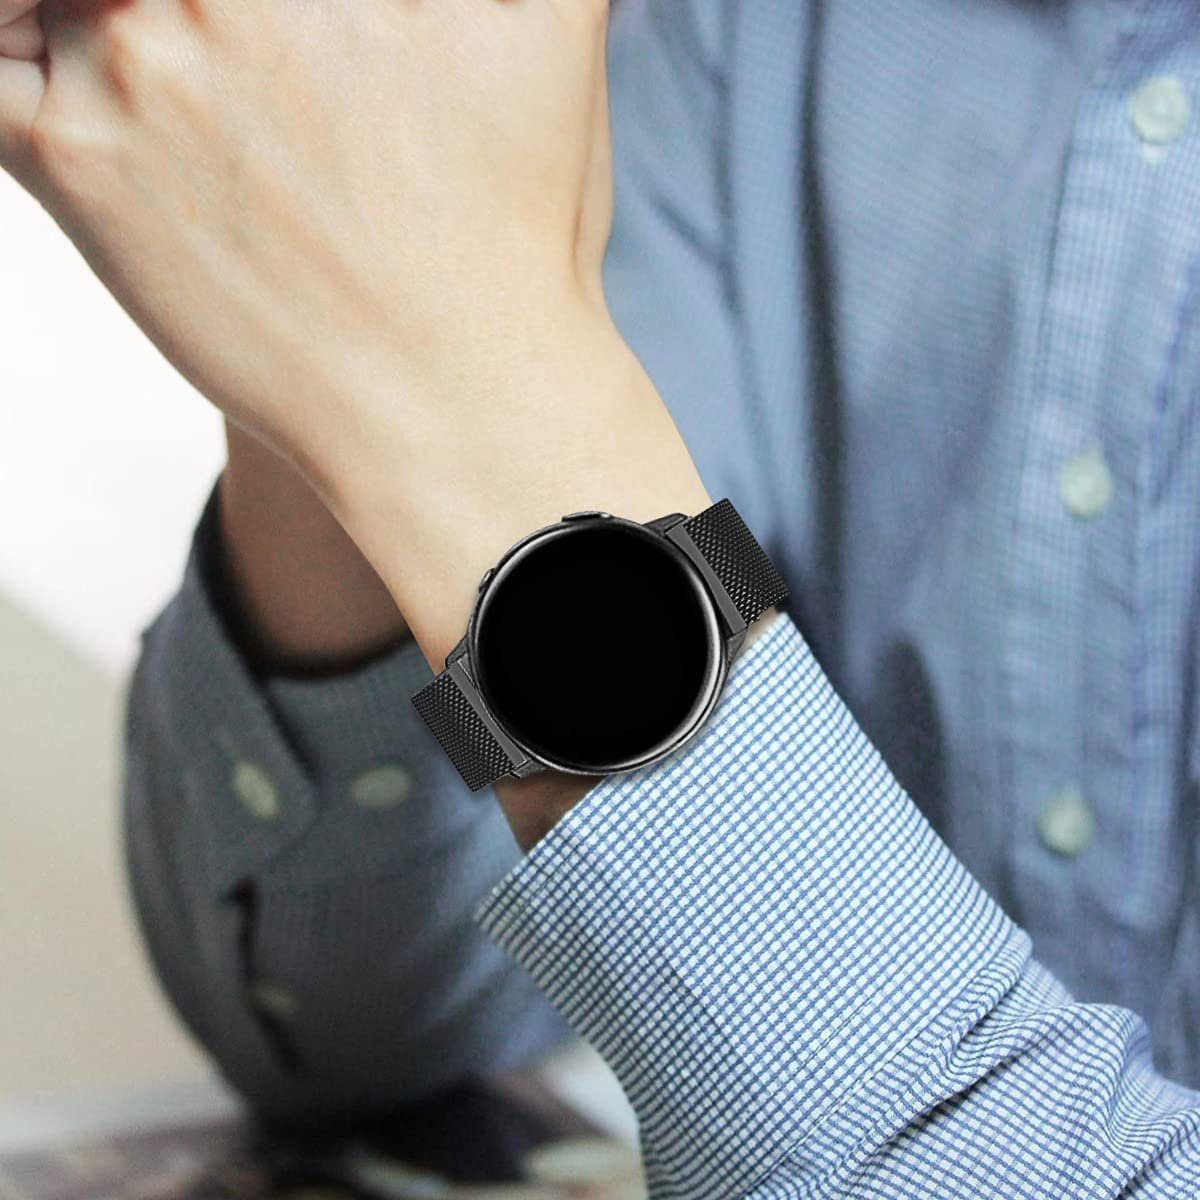 für 45mm/Watch 3 Galaxy Samsung 46mm Kompatibel ELEKIN Armband 22mm Smartwatch-Armband Watch